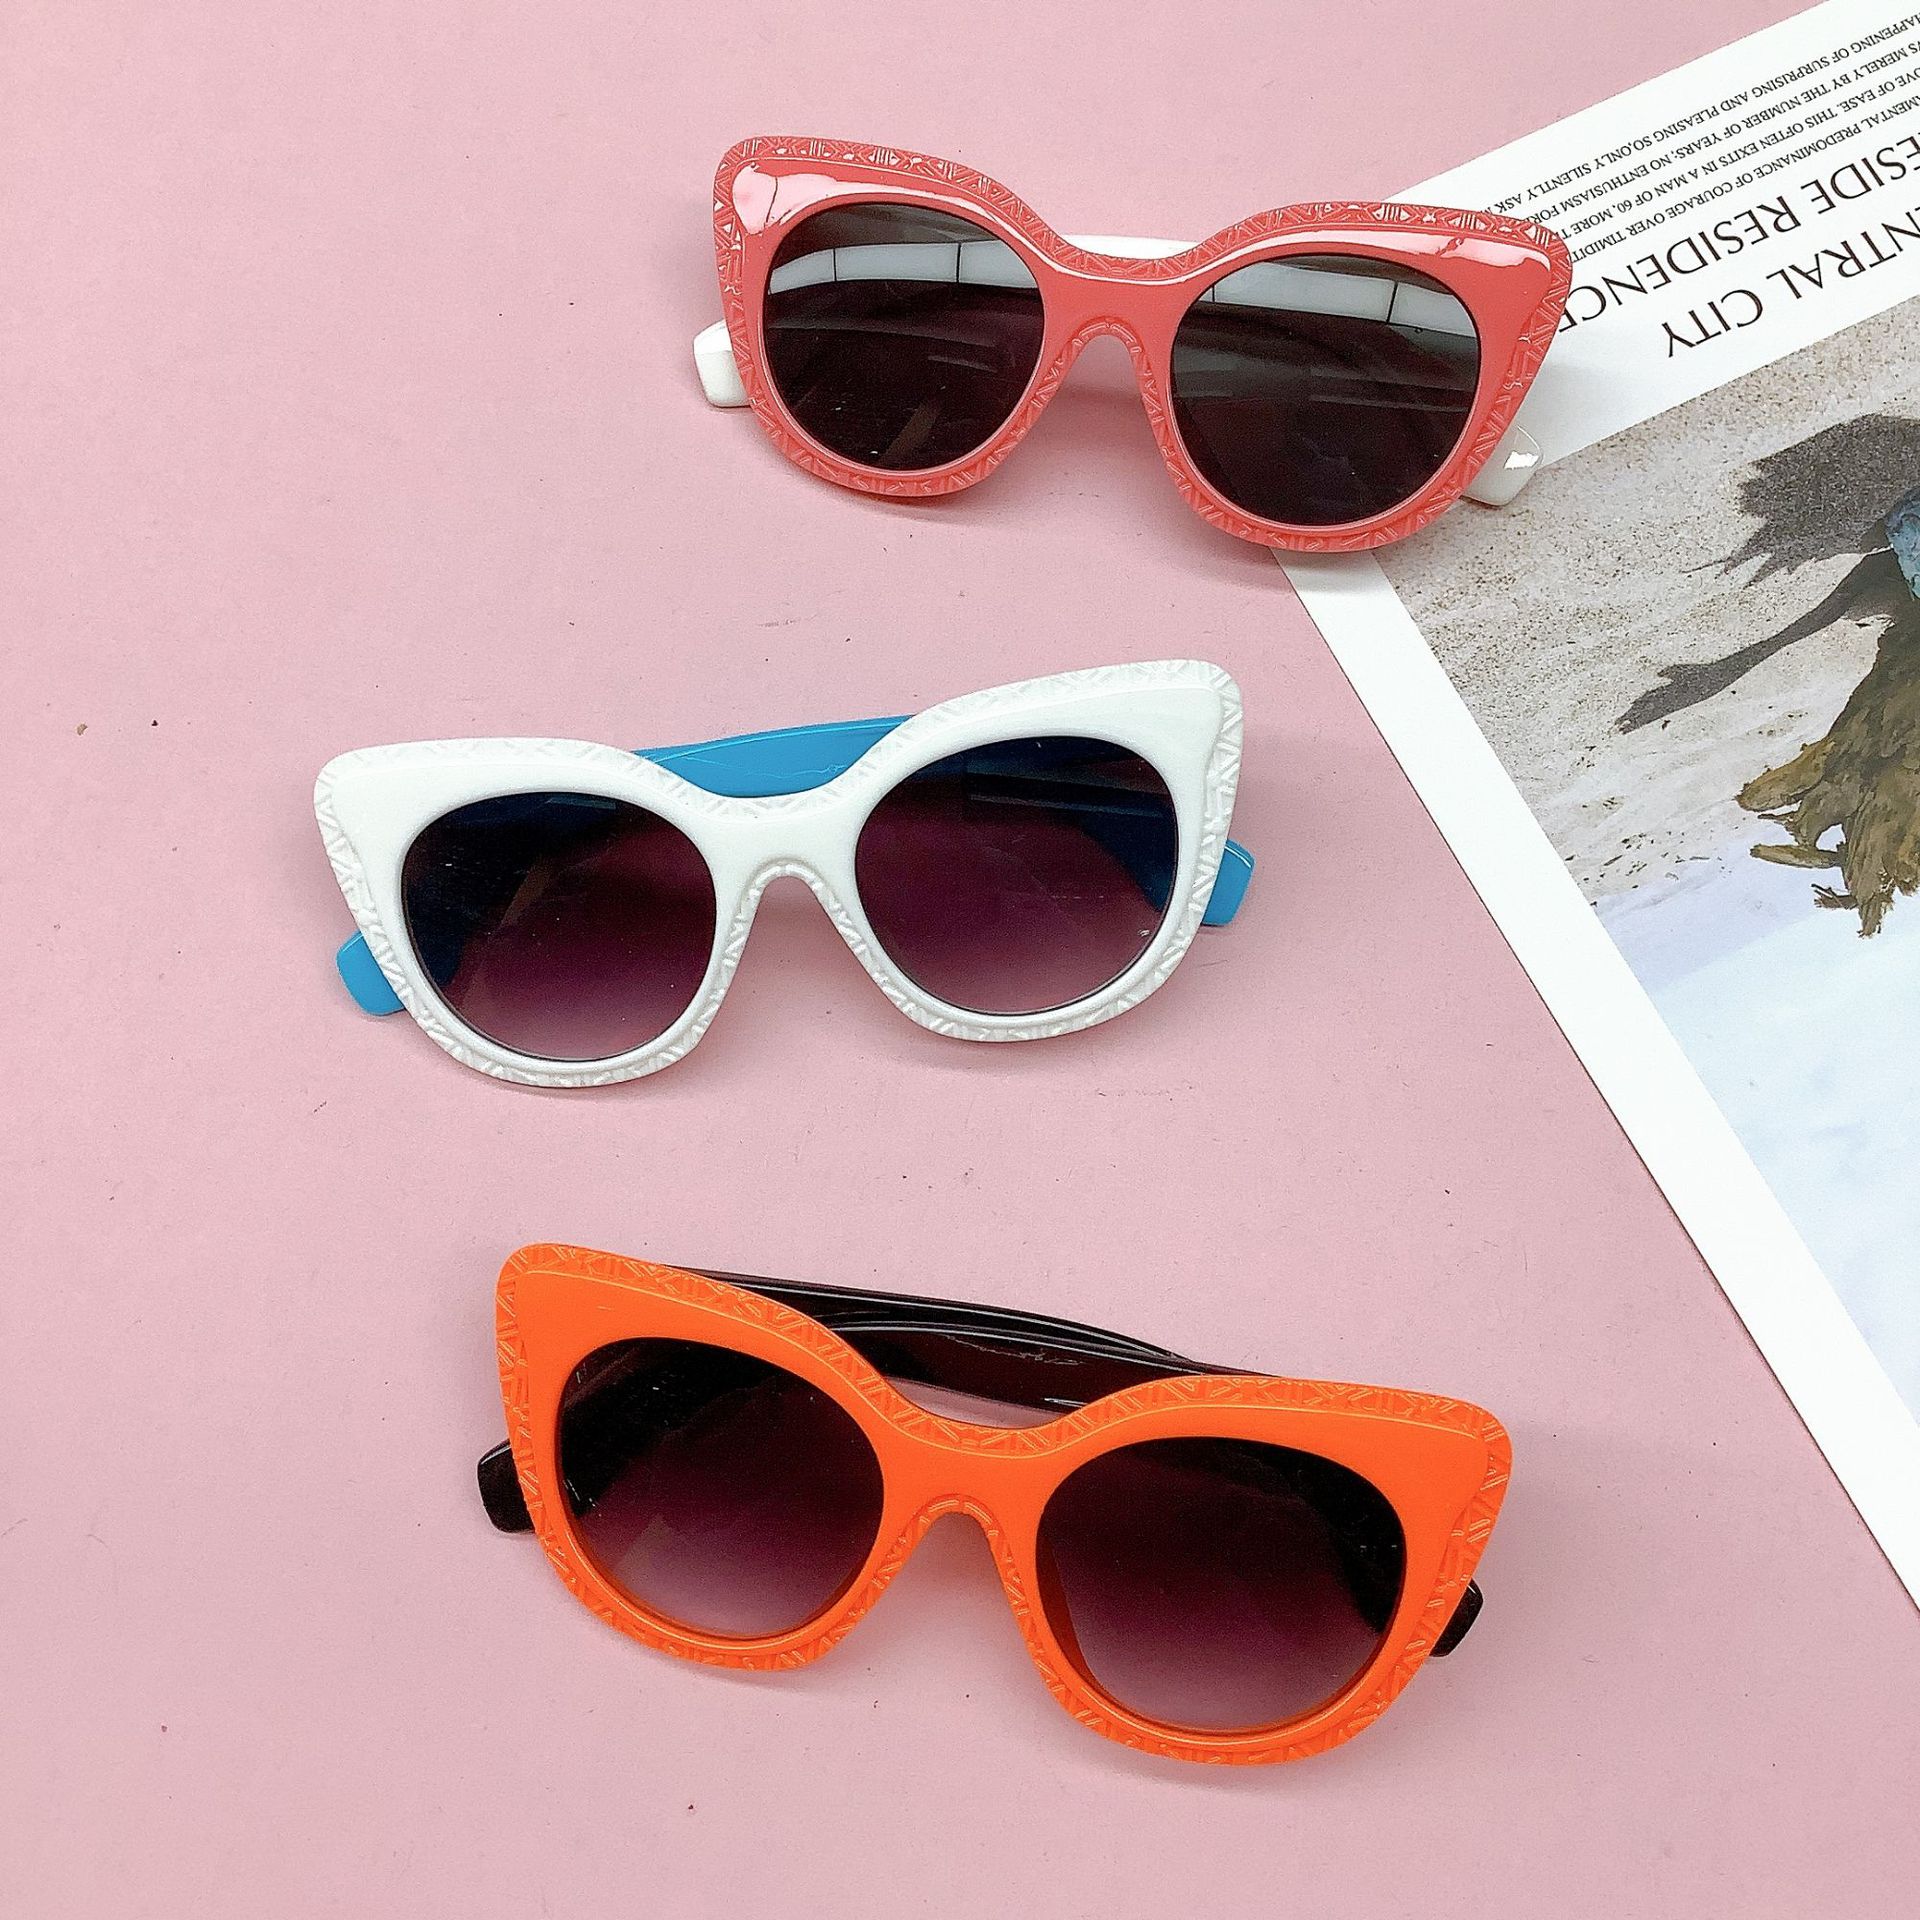 New Kids Sunglasses Fashion Travel UV-Proof Sunglasses Baby Boys Girls Concave Shape Wear Match Glasses